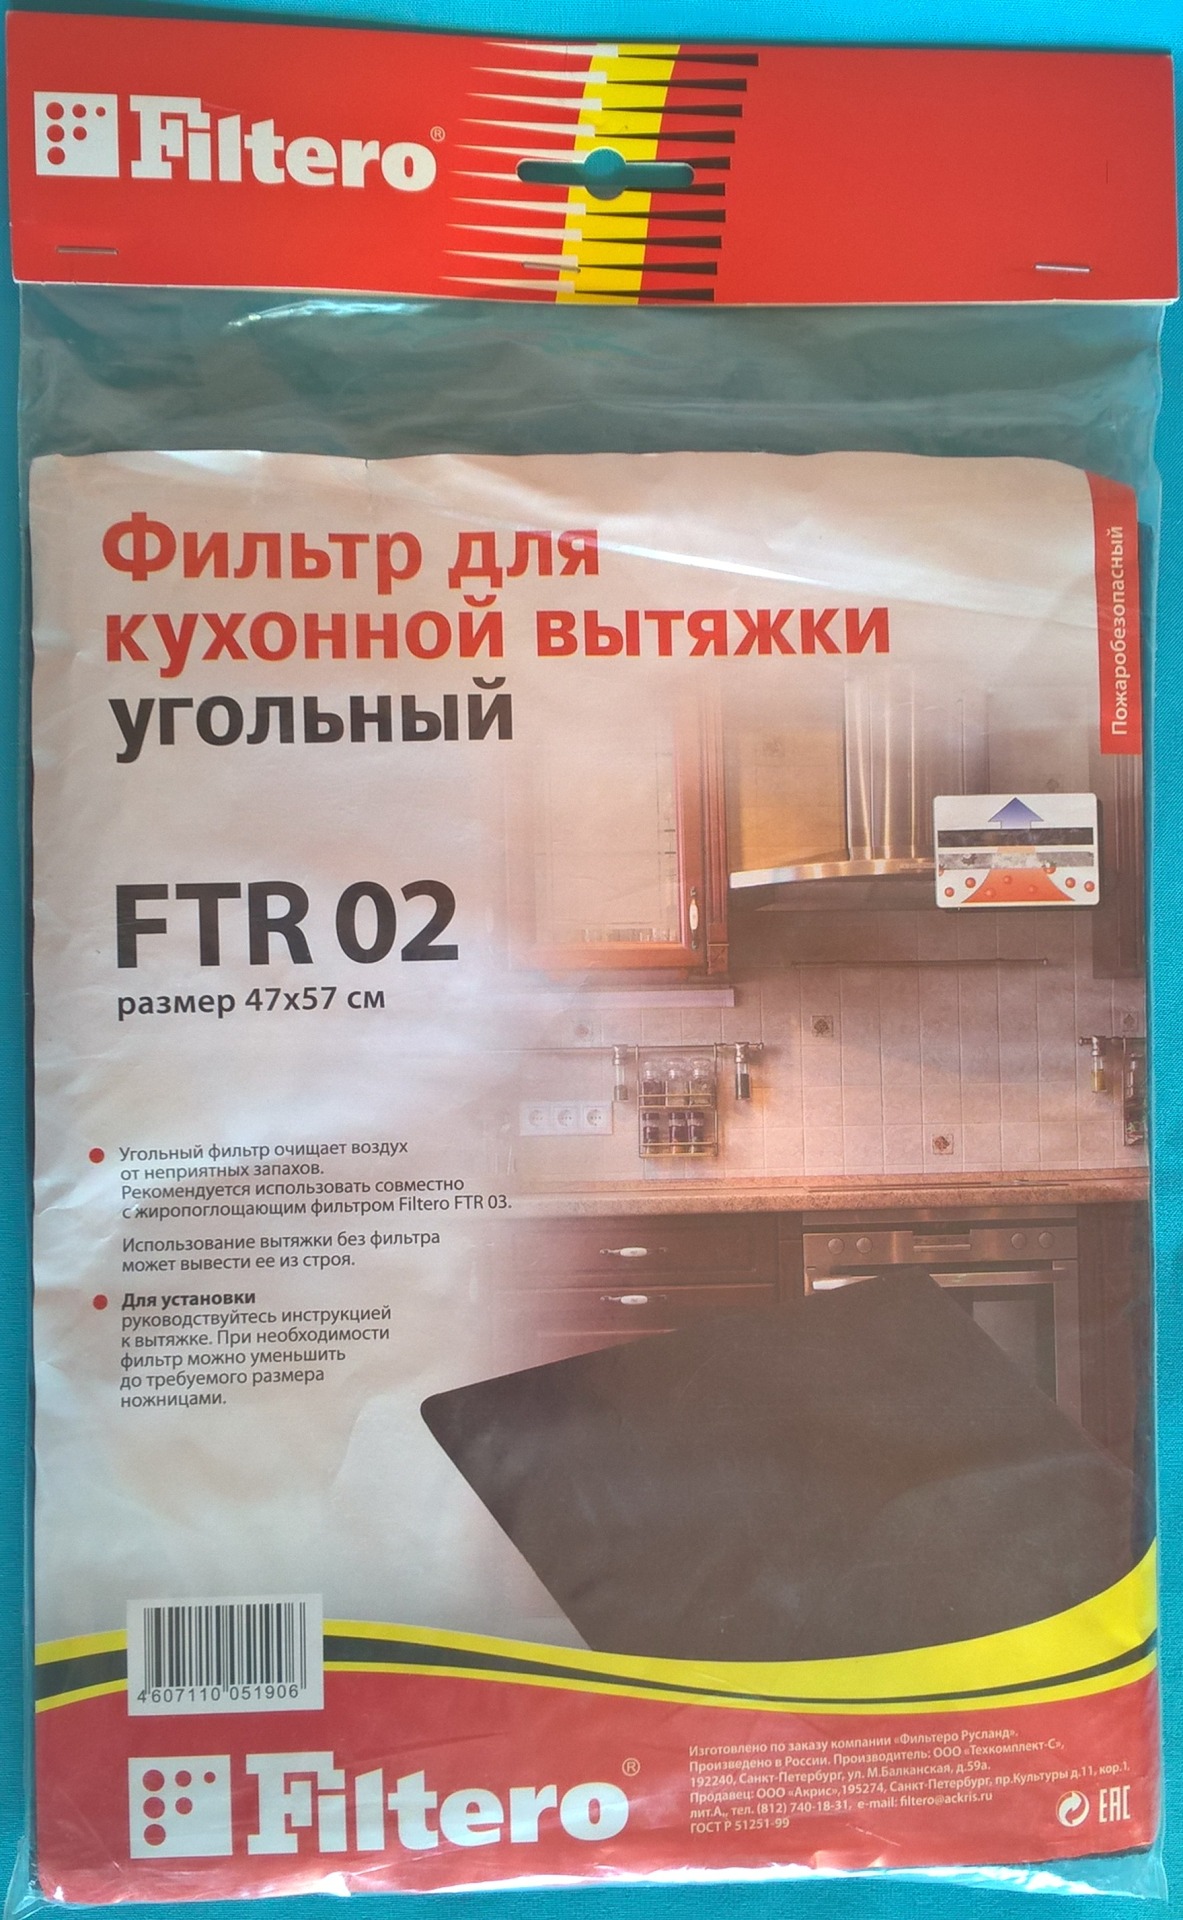 Filtero FTR 02  для кухонных вытяжек